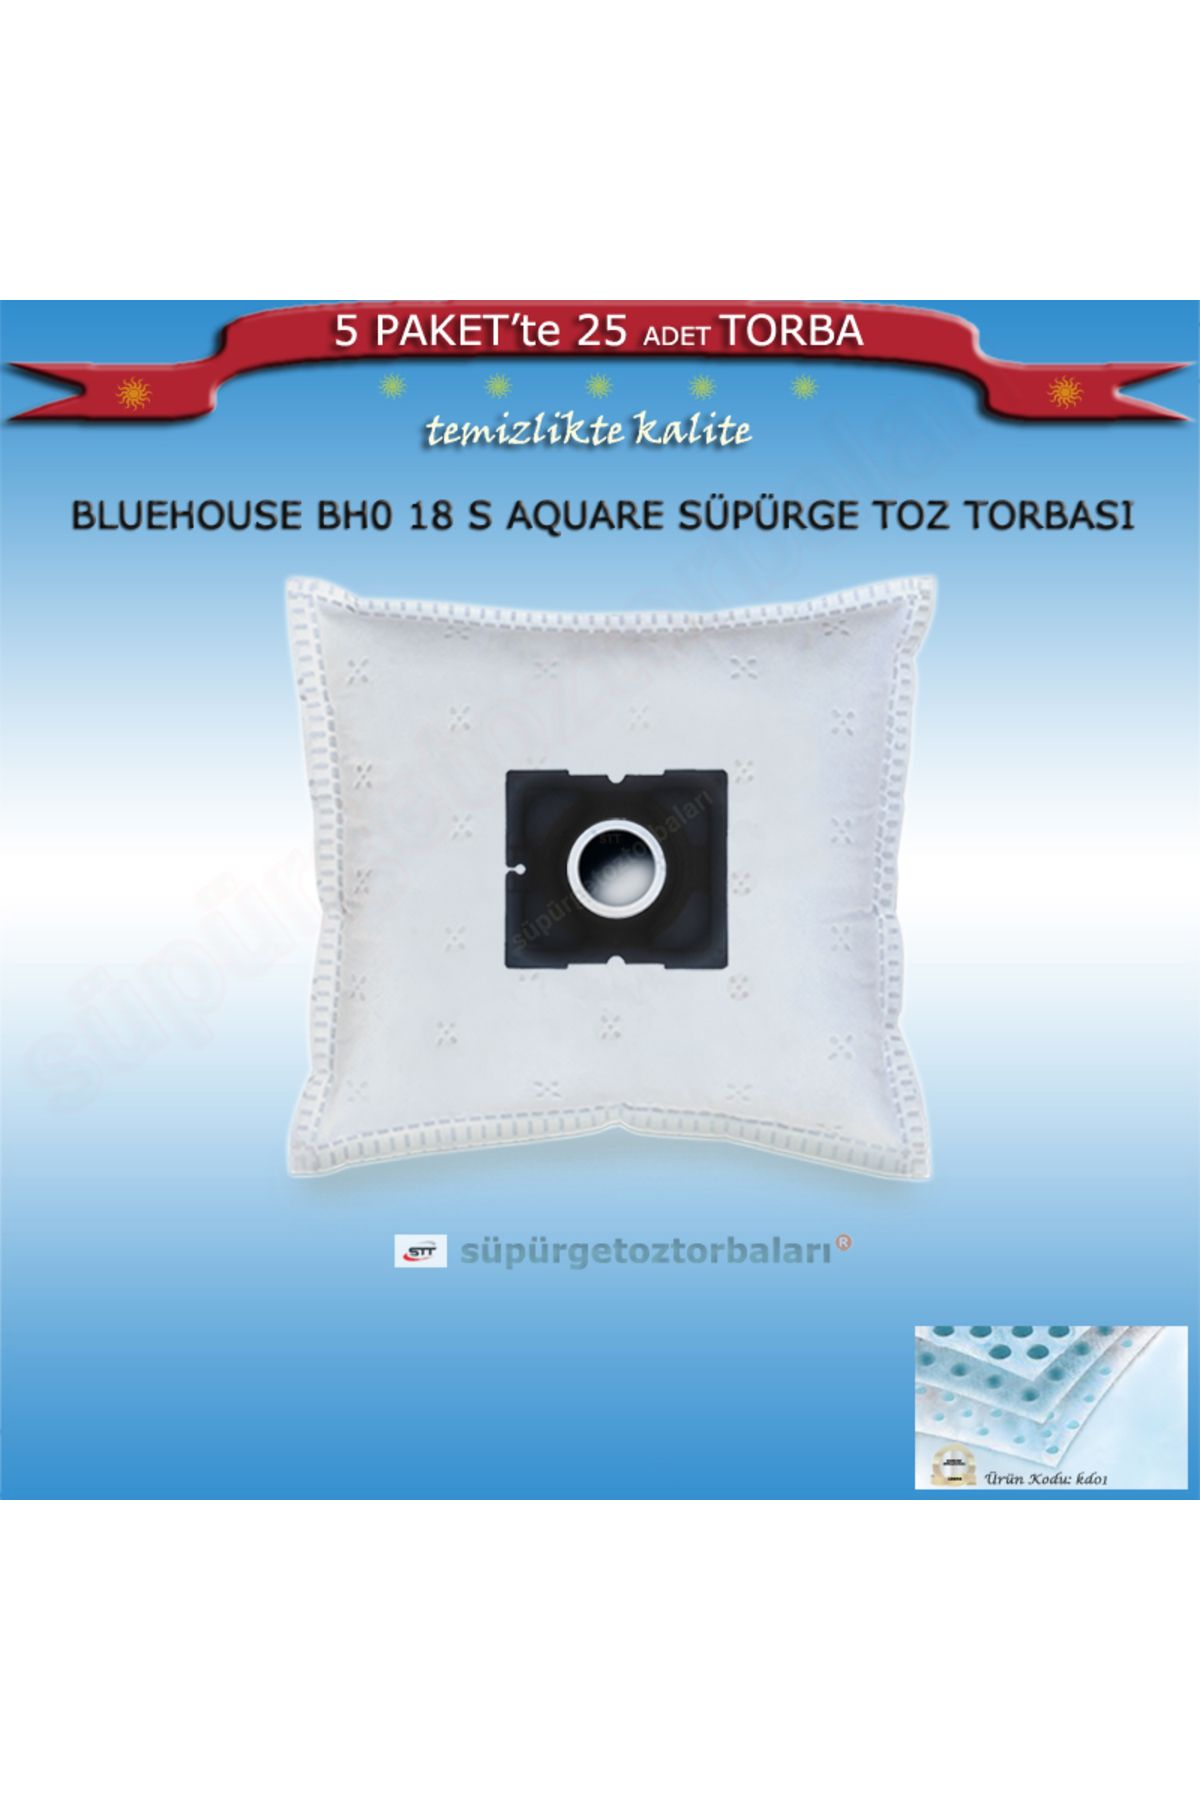 BLUE HOUSE Bluehouse Bh0 18 S Aquare Süpürge Toz Torbası 25 Adet Torba Kd01